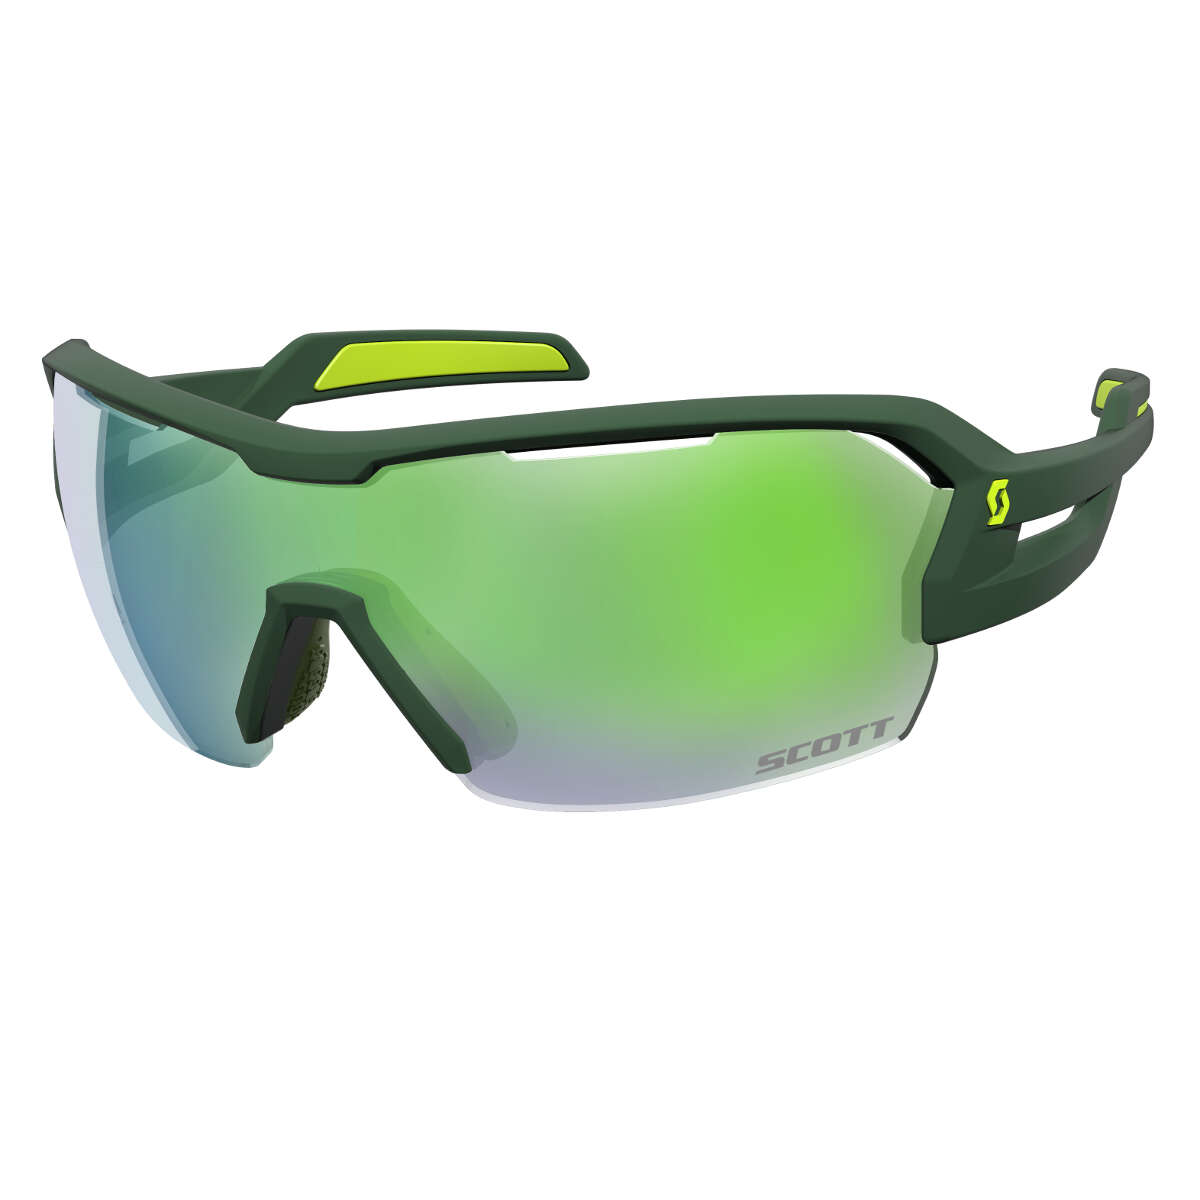 Scott Sportbrille Spur Grün/Gelb - Green Chrome